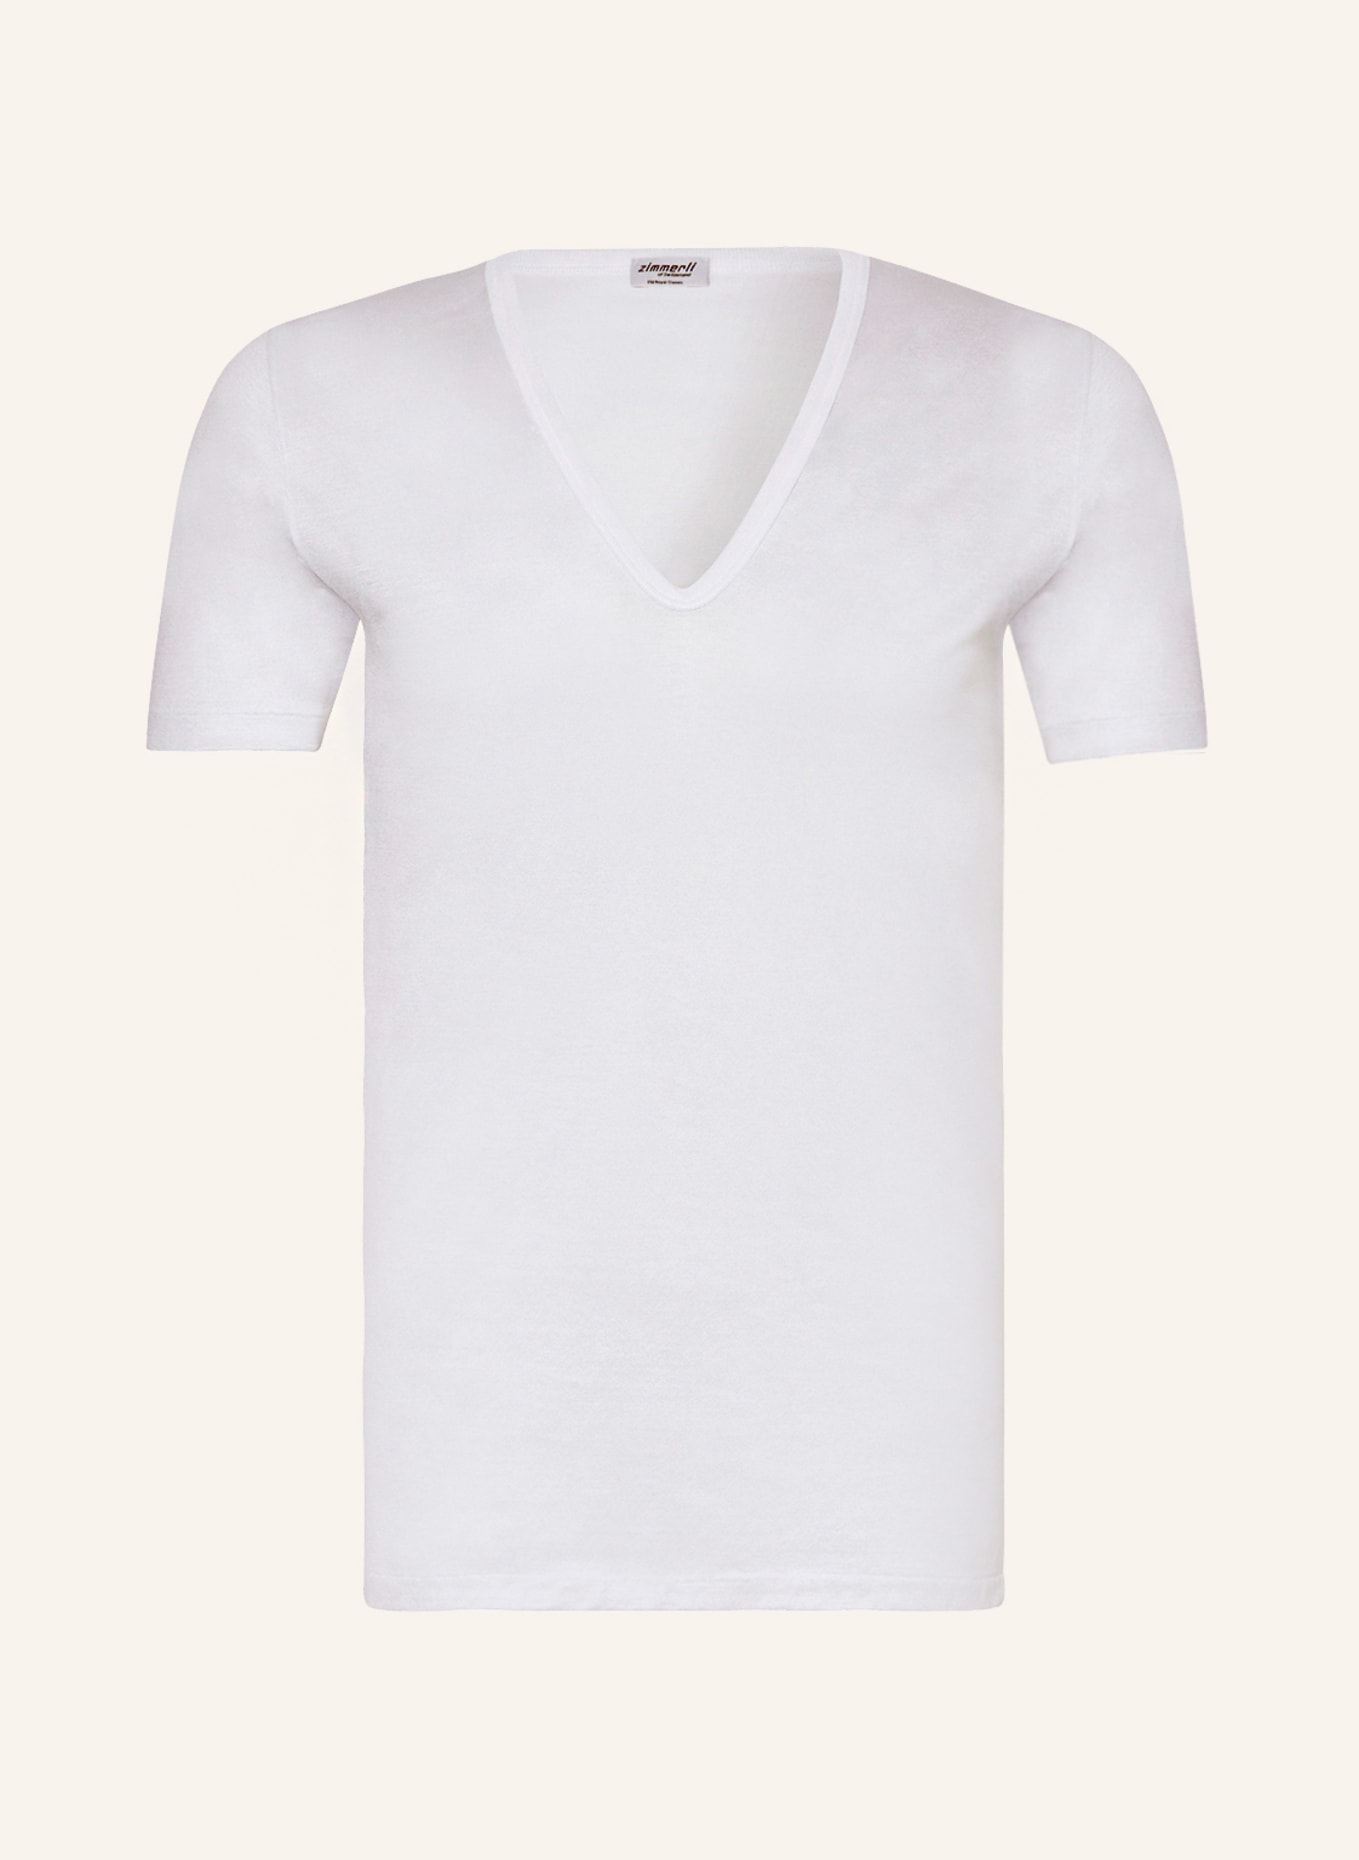 zimmerli V-Shirt ROYAL CLASSIC, Farbe: WEISS (Bild 1)